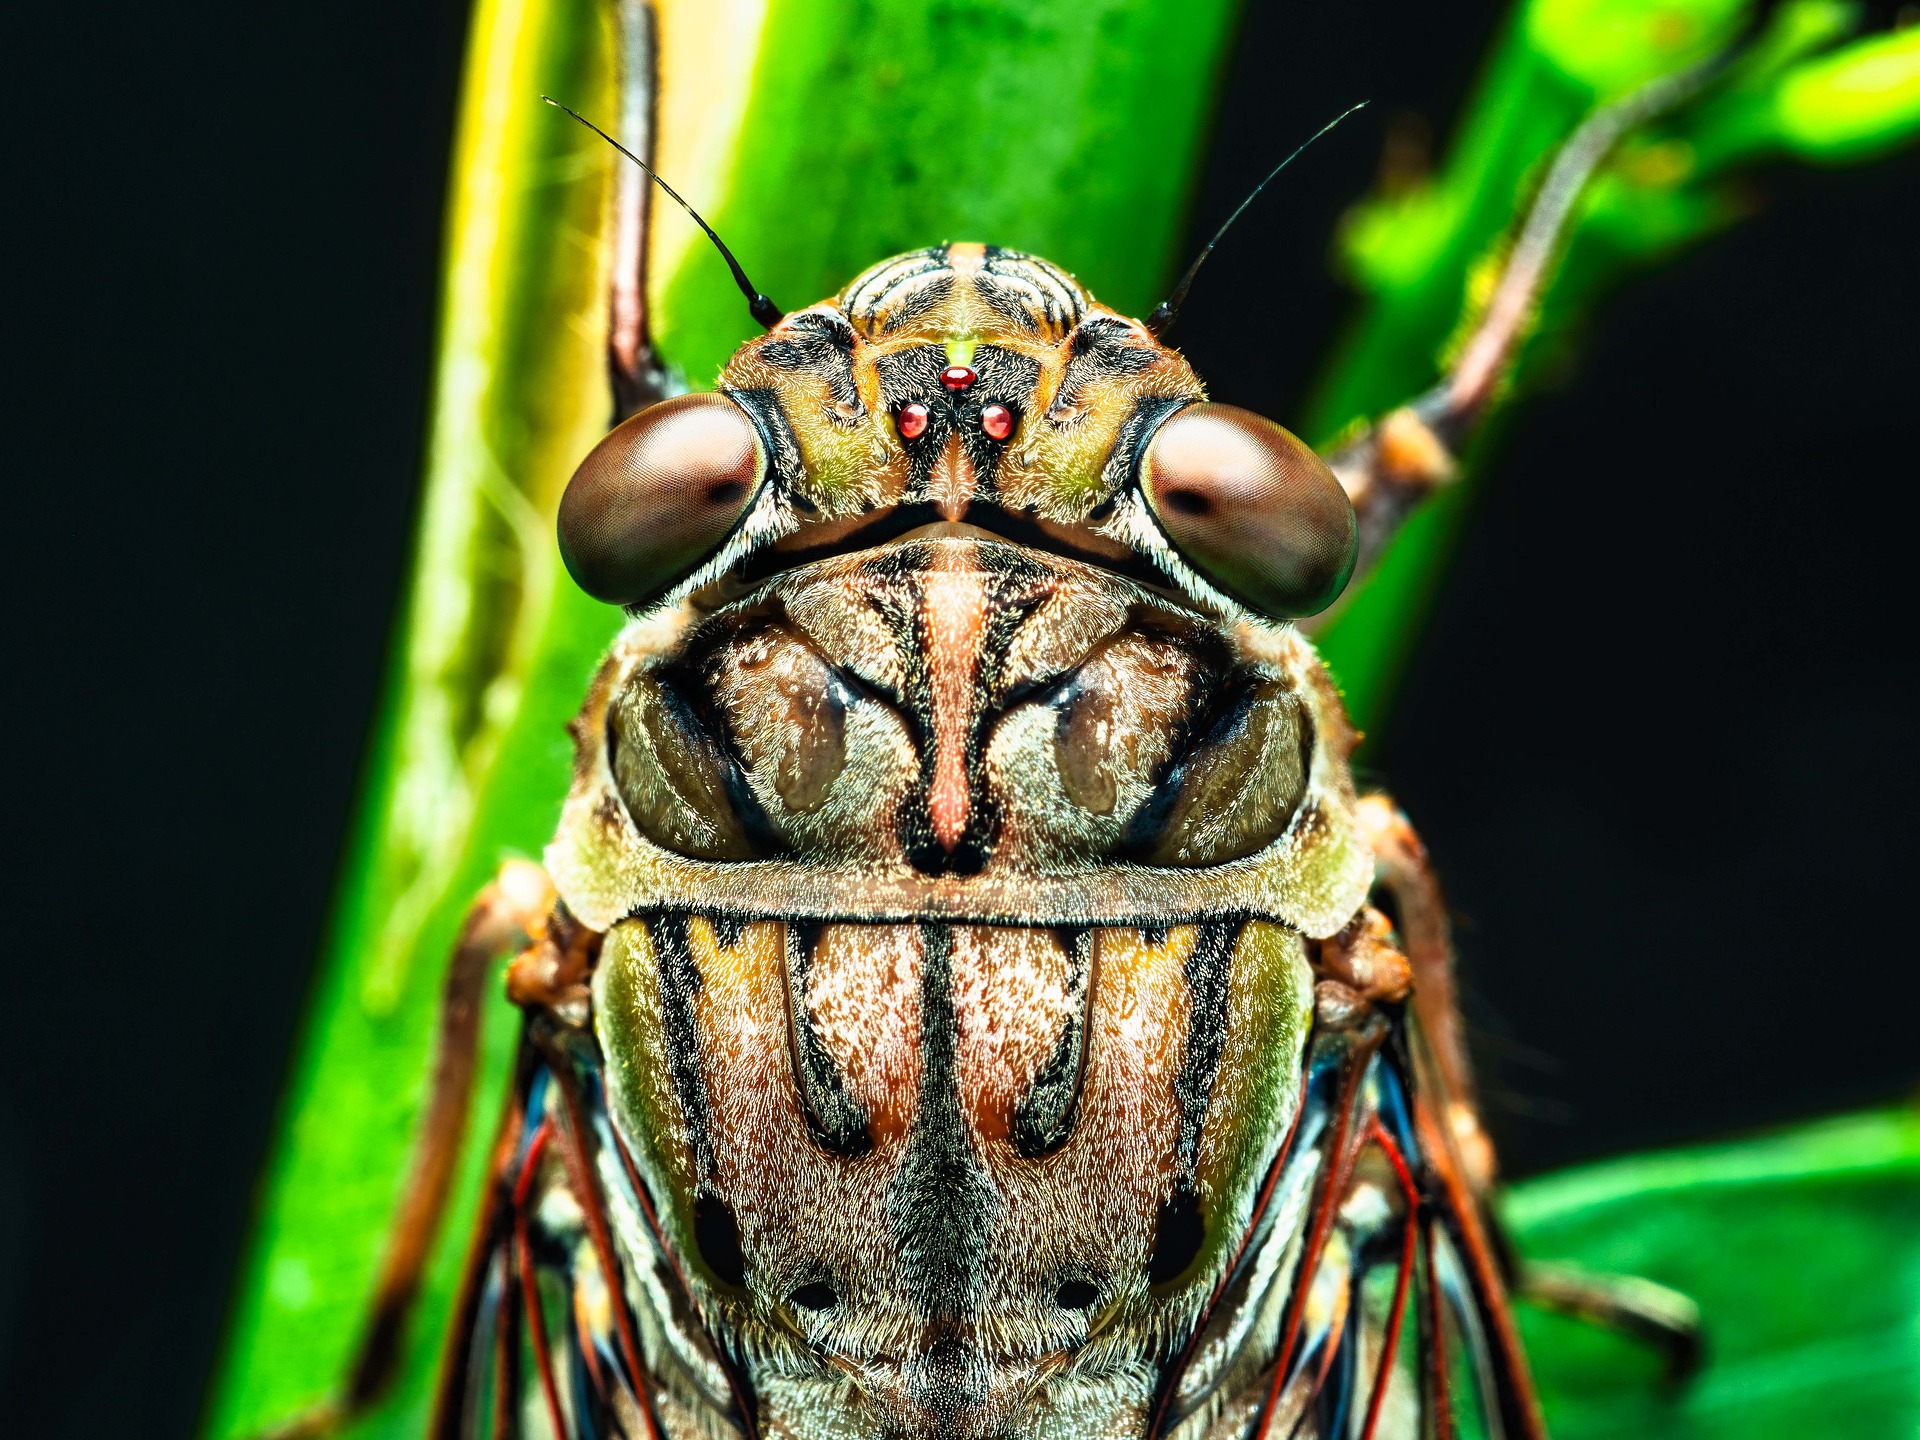 The Wild Life 8D Soundscapes: Summer Cicadas